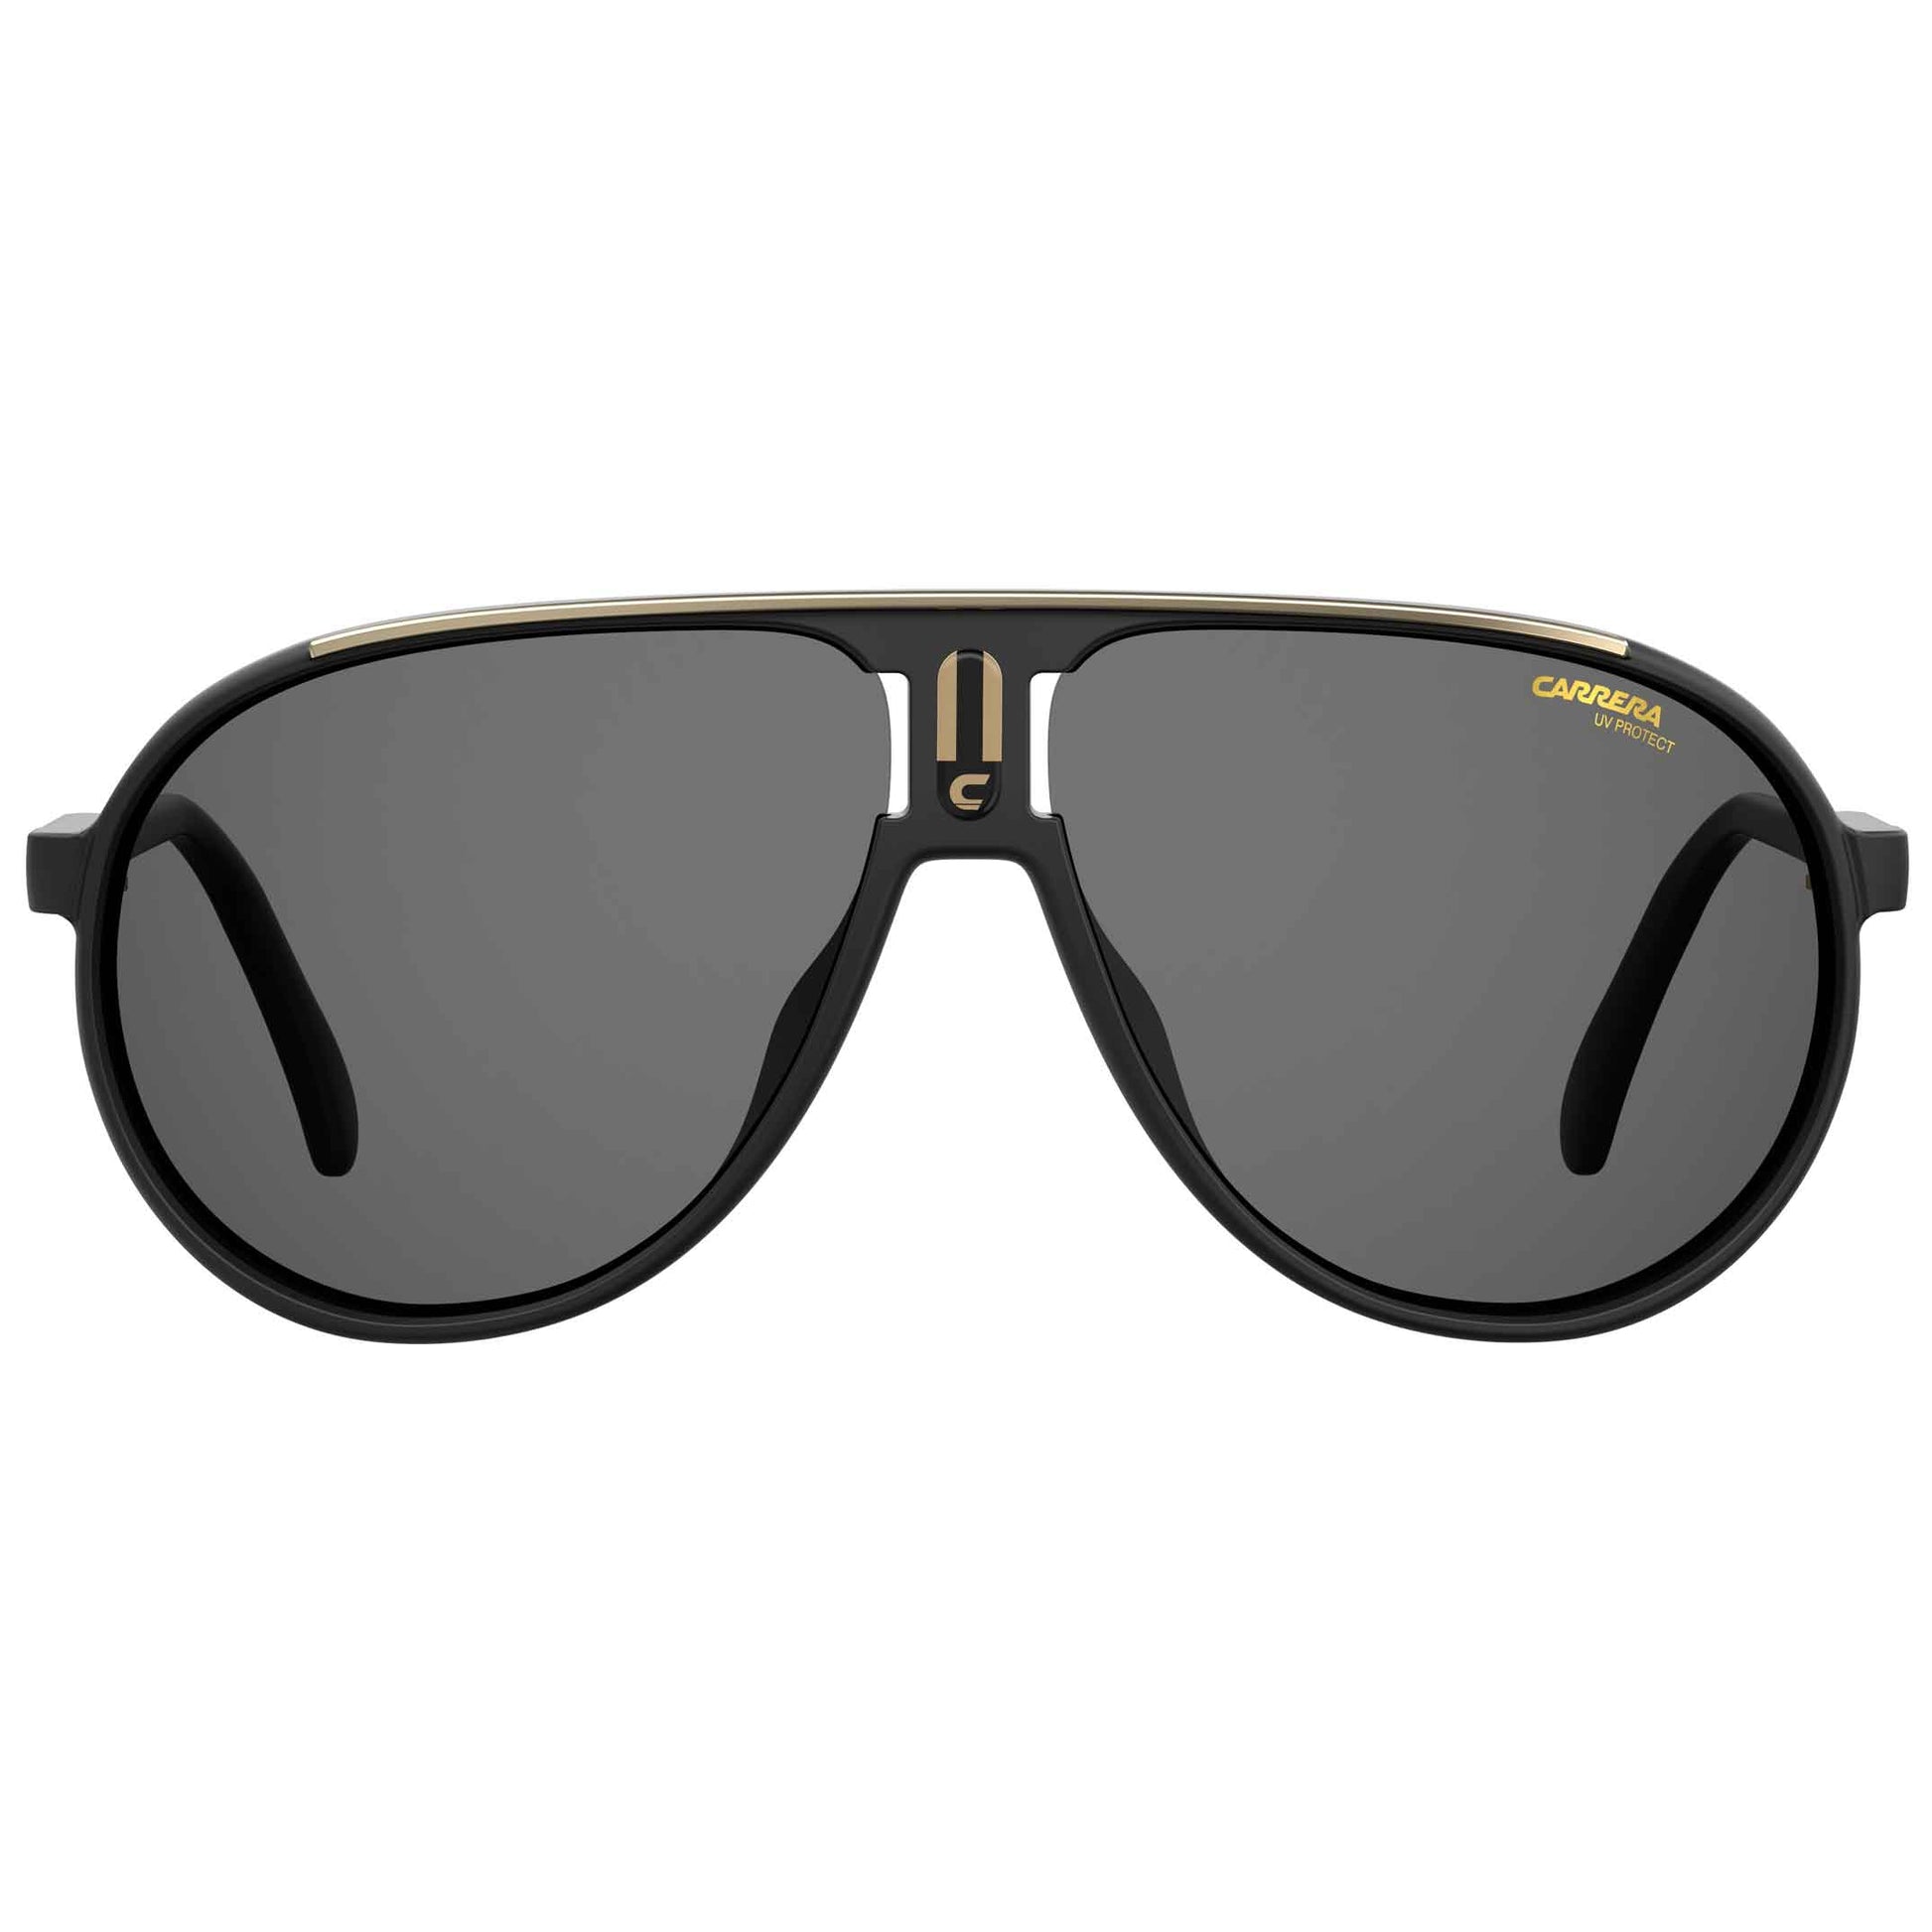 BRAND SUNGLASSES Carrera NEW CHAMPION - Sunglasses - Men's - black